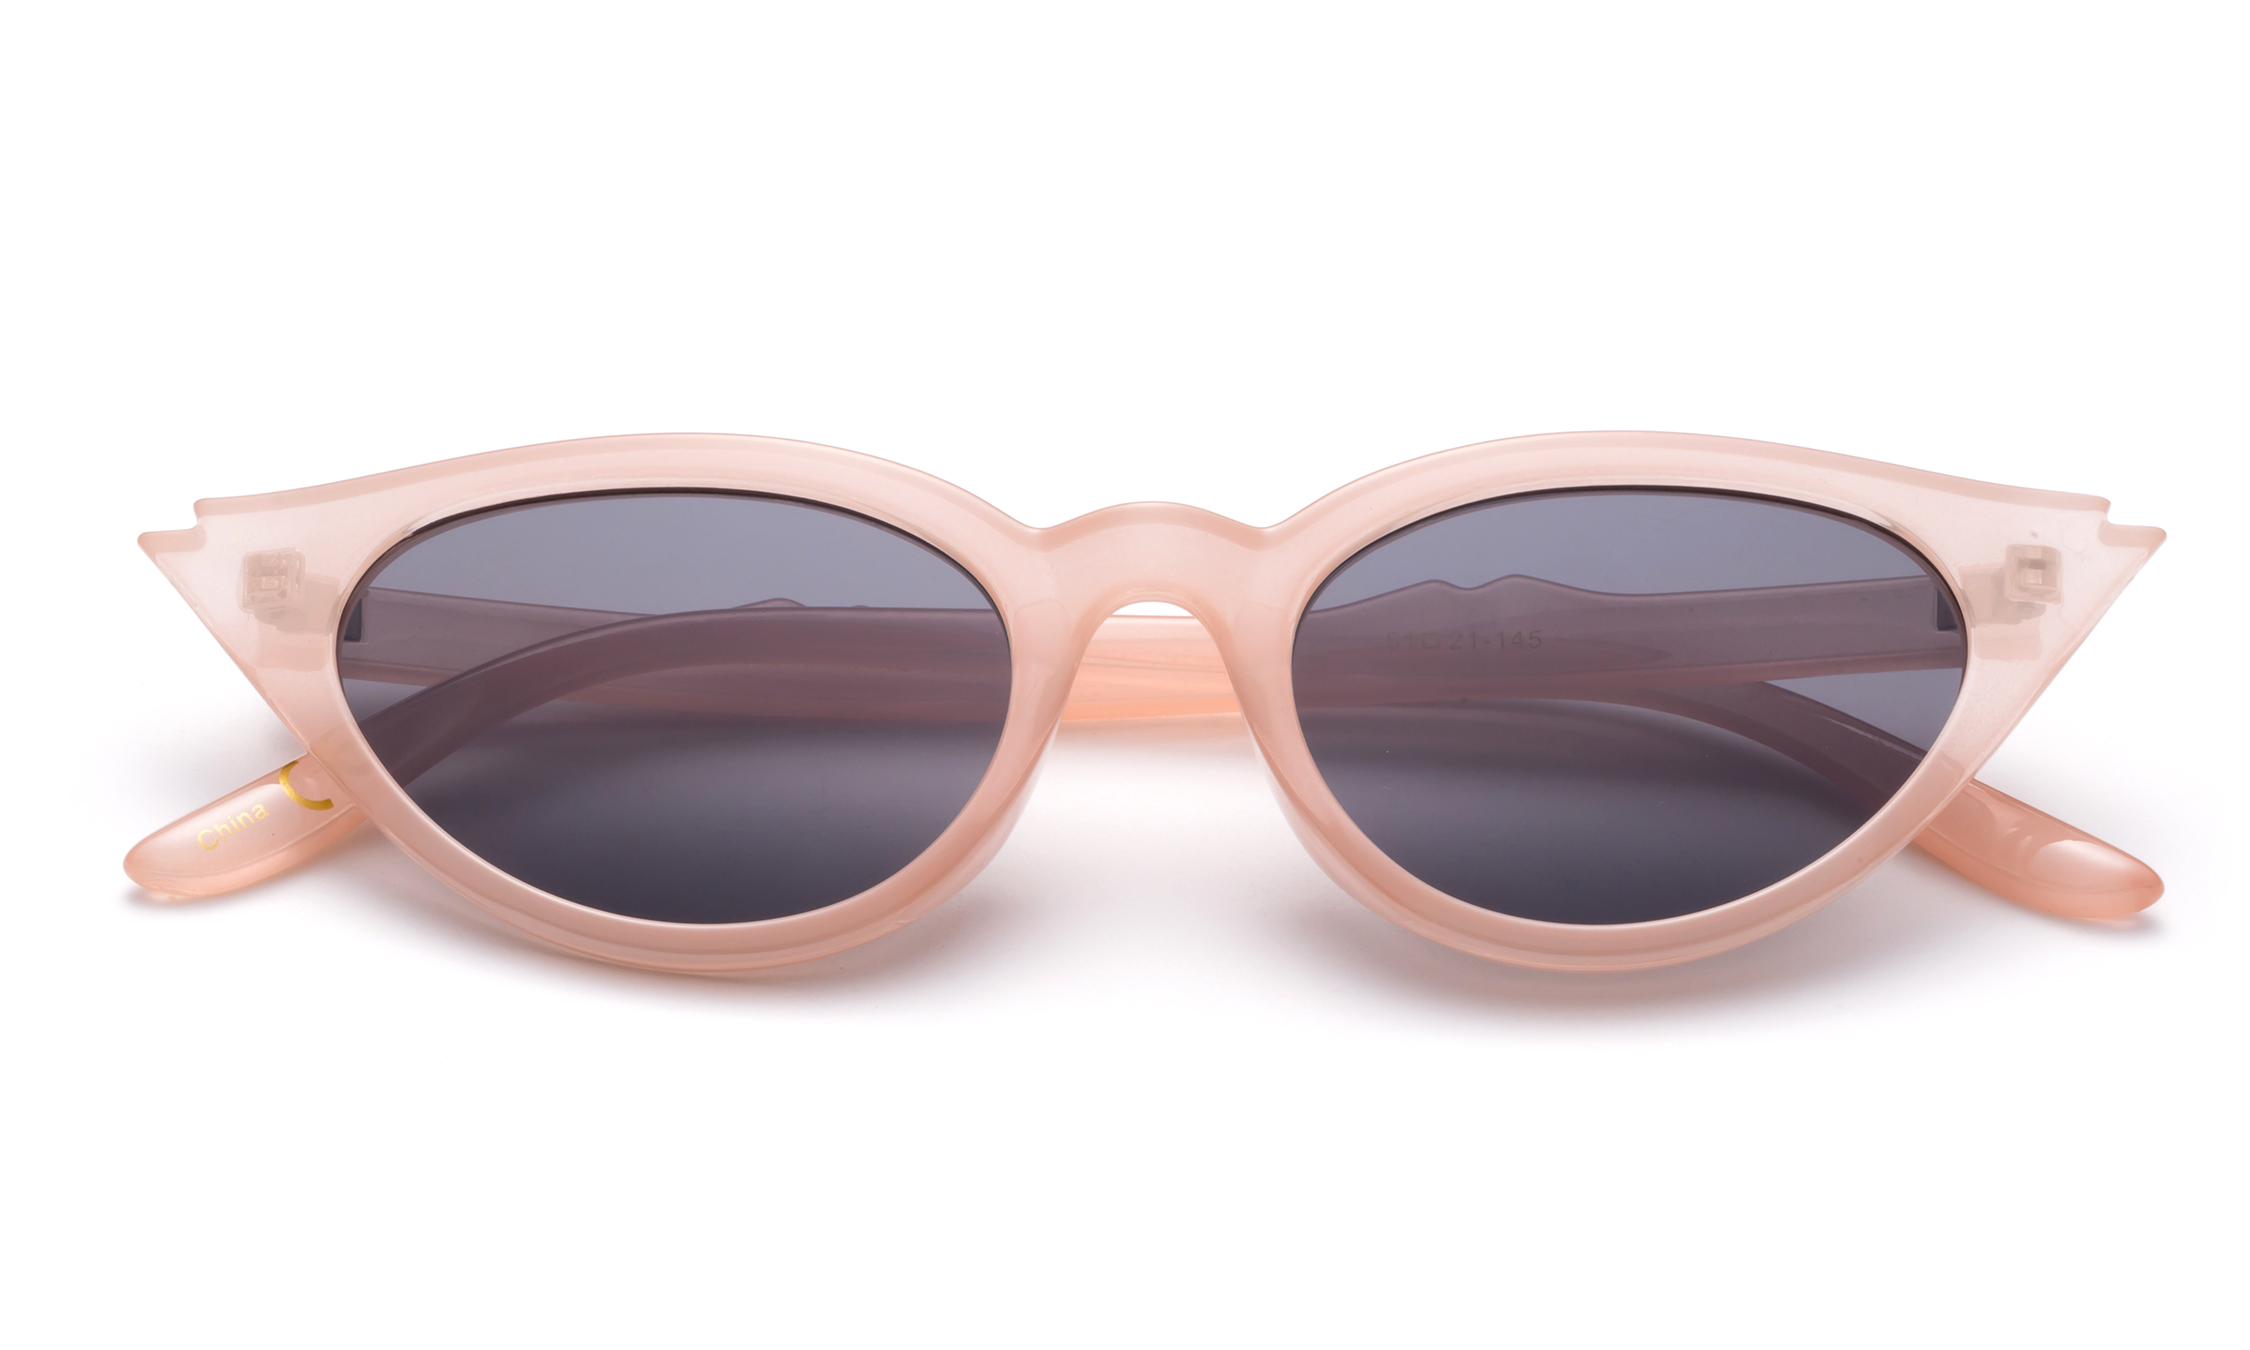 Designer Inspired Women Cat eye Sunglasses Cateye Retro Fashion Sunglasses for Women Vintage Sunglasses Small - image 3 of 3